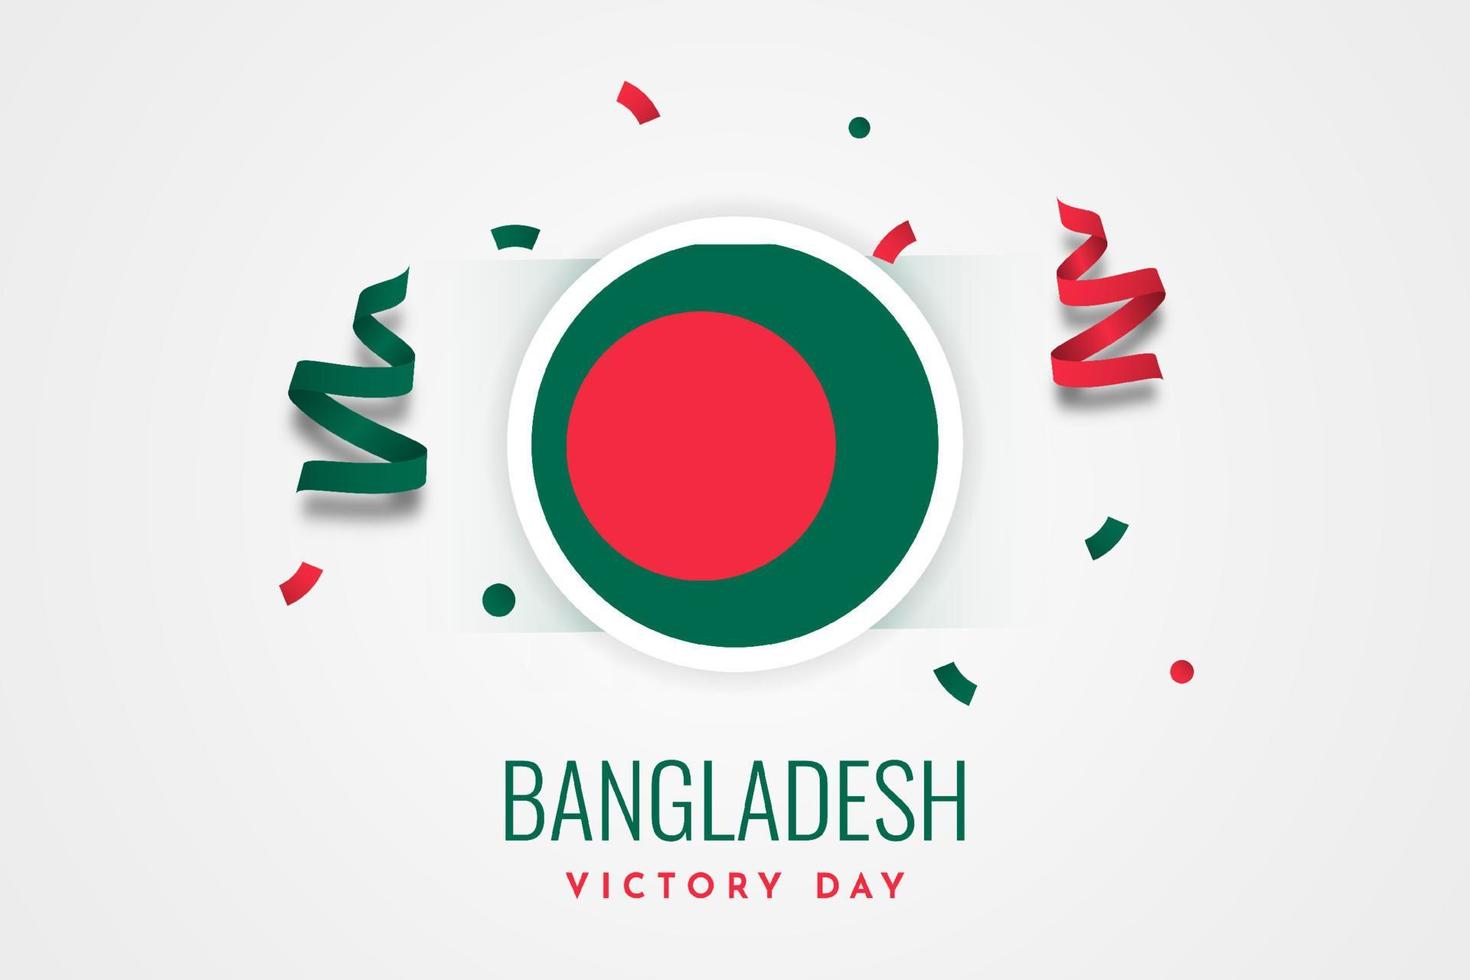 Bangladesh victory day celebration template design vector